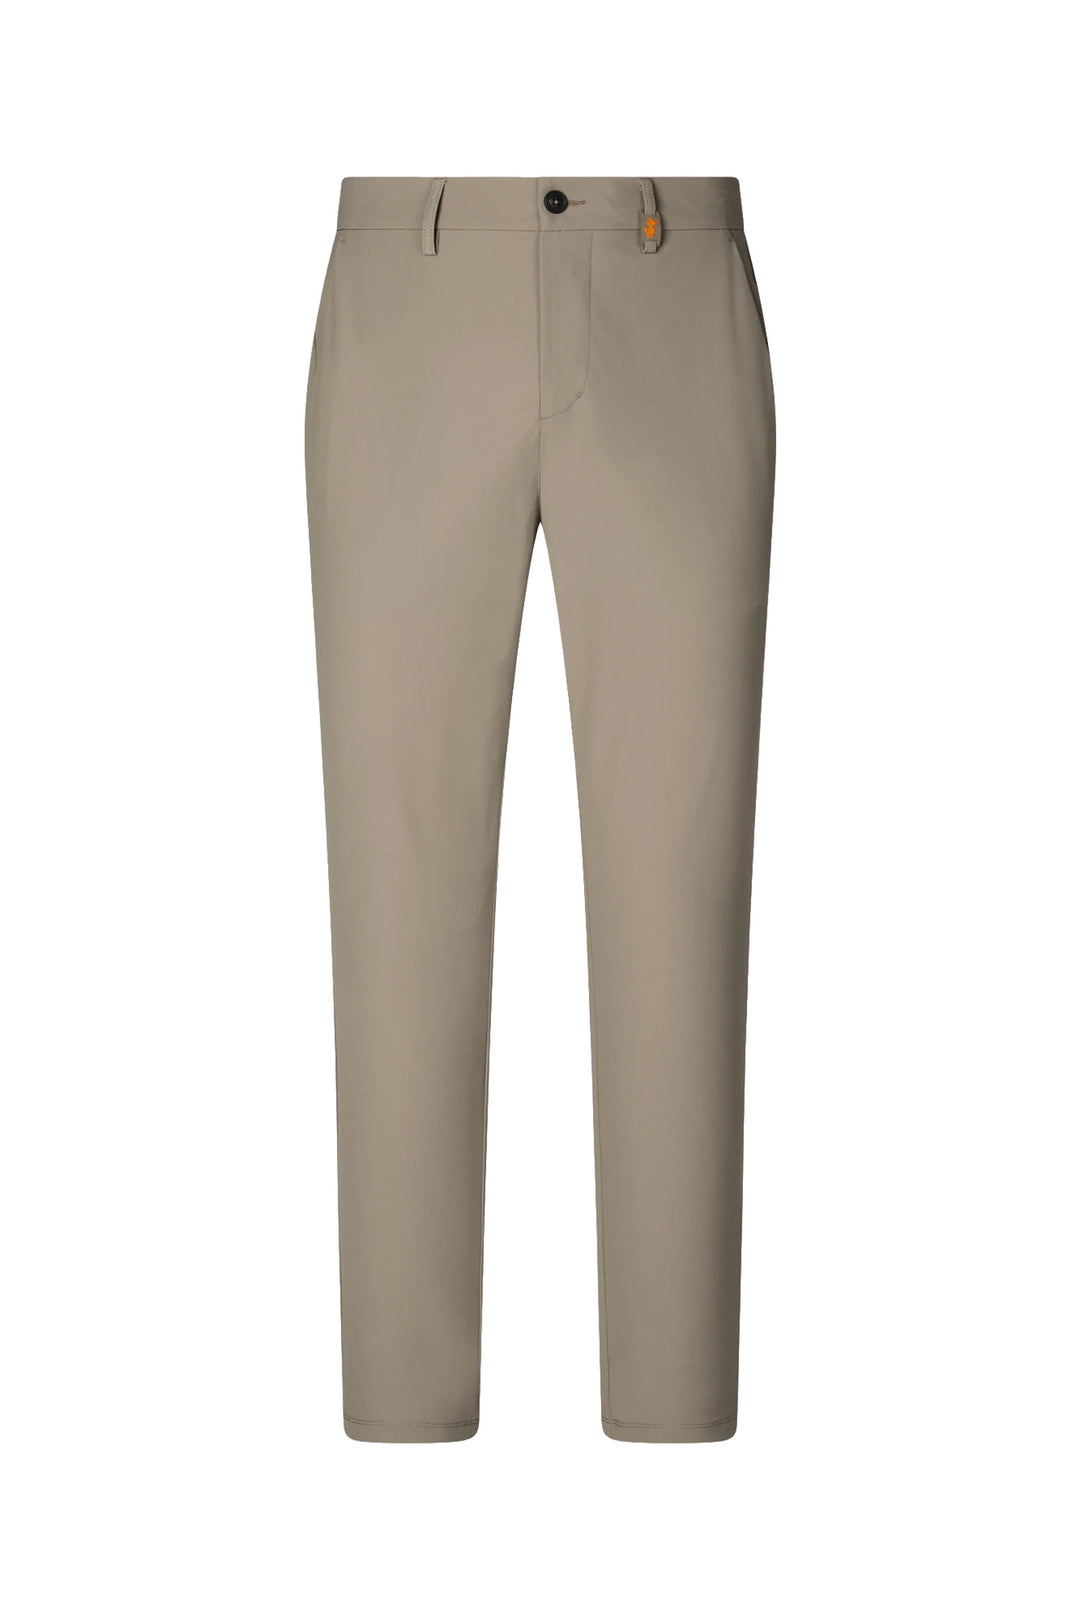 SAVE THE DUCK Pantaloni chino slim beige “STEVE” in nylon stretch - Mancinelli 1954